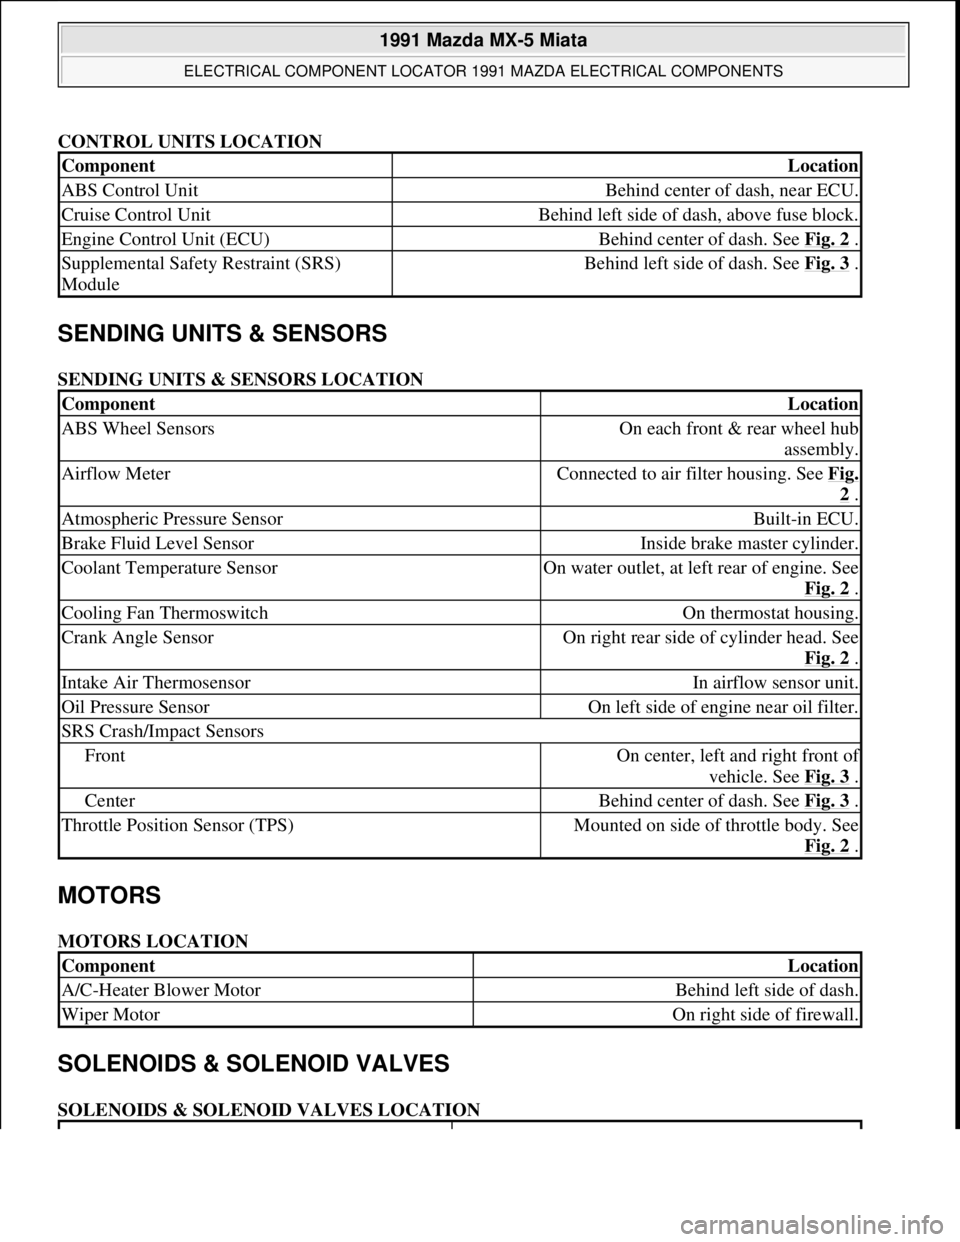 MAZDA MIATA 1991  Factory Service Manual CONTROL UNITS LOCATION 
SENDING UNITS & SENSORS 
SENDING UNITS & SENSORS LOCATION 
MOTORS 
MOTORS LOCATION 
SOLENOIDS & SOLENOID VALVES 
SOLENOIDS & SOLENOID VALVES LOCATION 
ComponentLocation
ABS Con